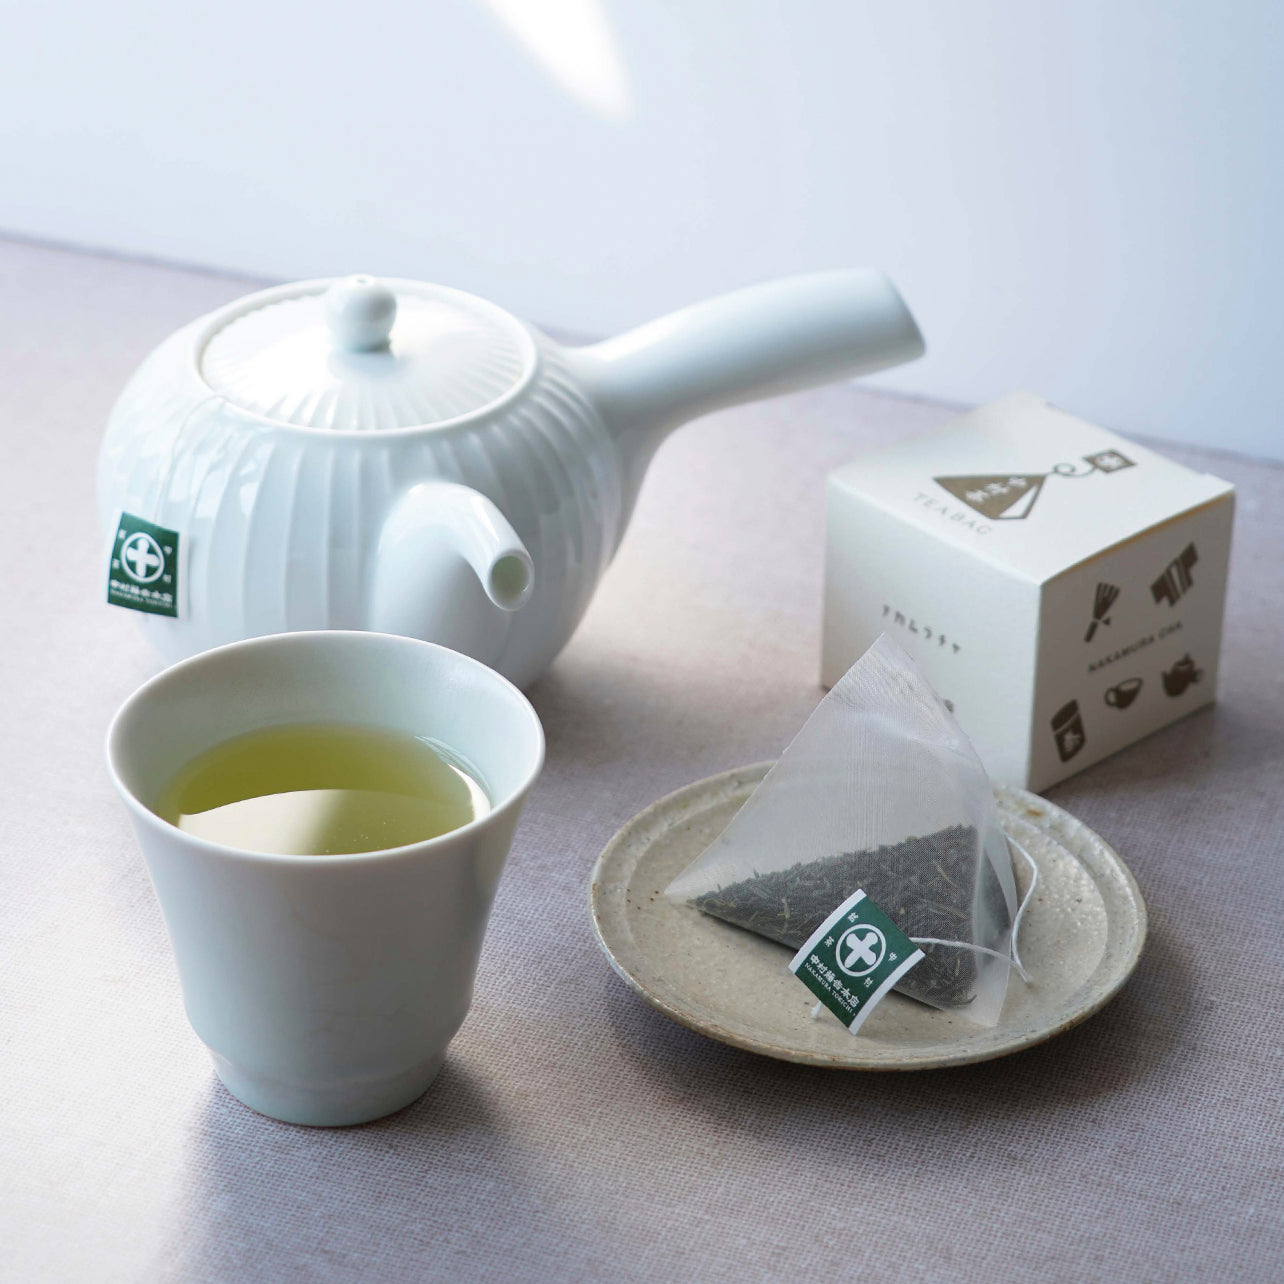 Maruto Baum [rich tea salt] and cube set